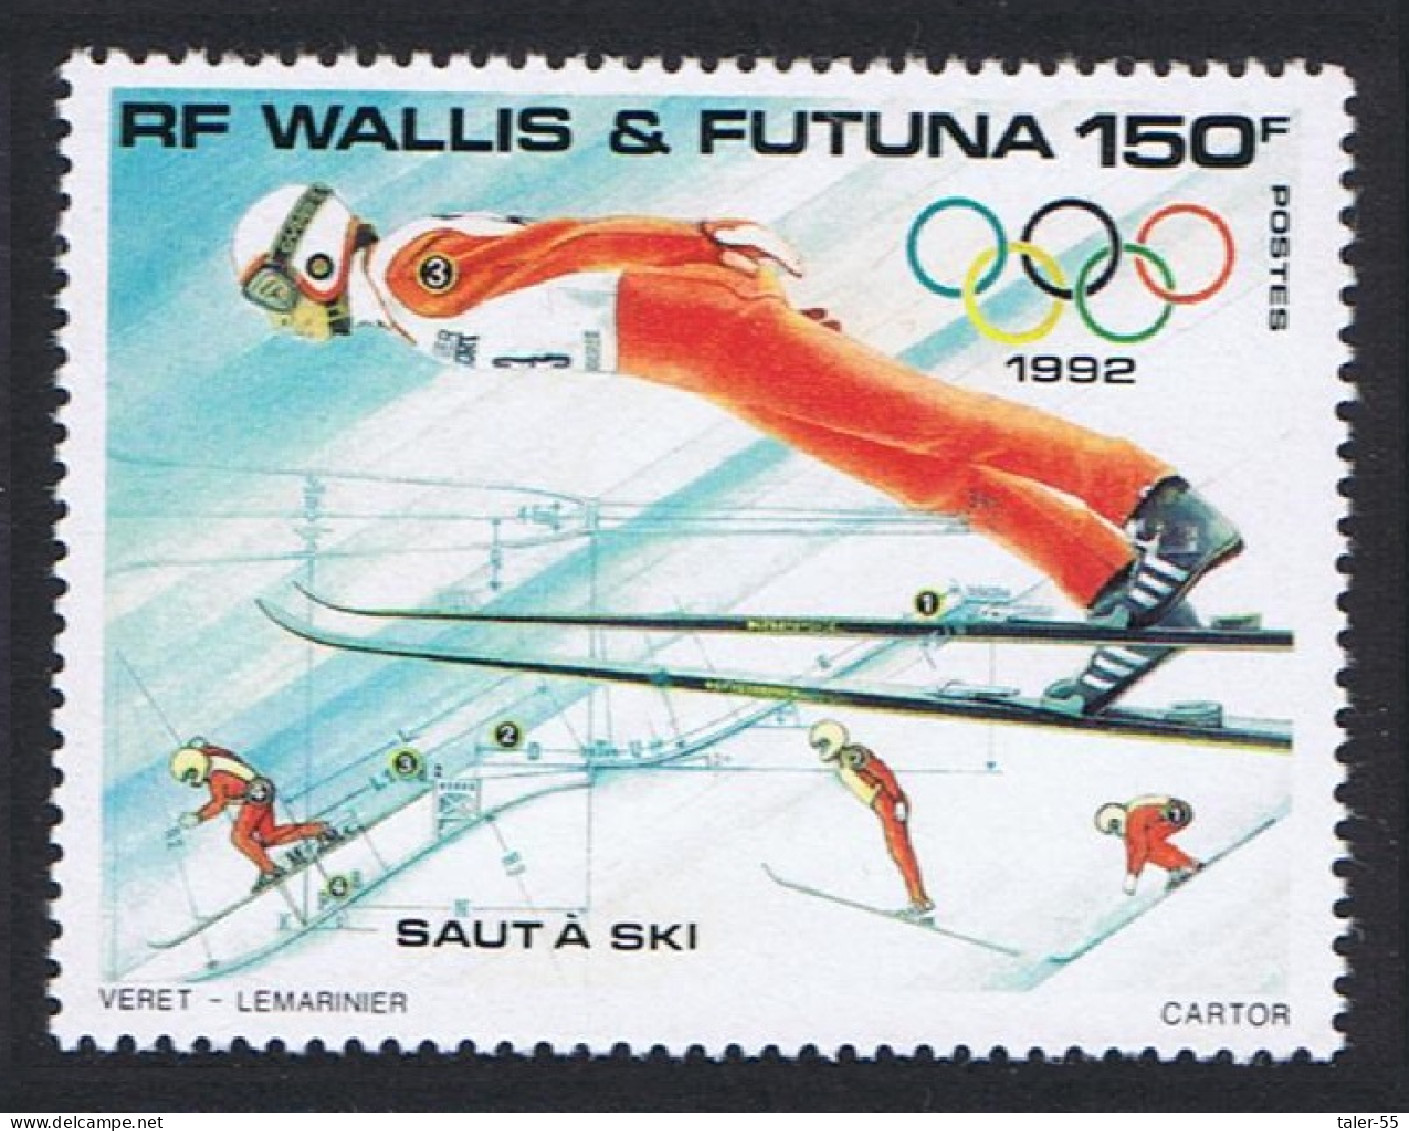 Wallis And Futuna Winter Olympic Games Albertville 1992 MNH SG#593 Sc#421 - Nuovi